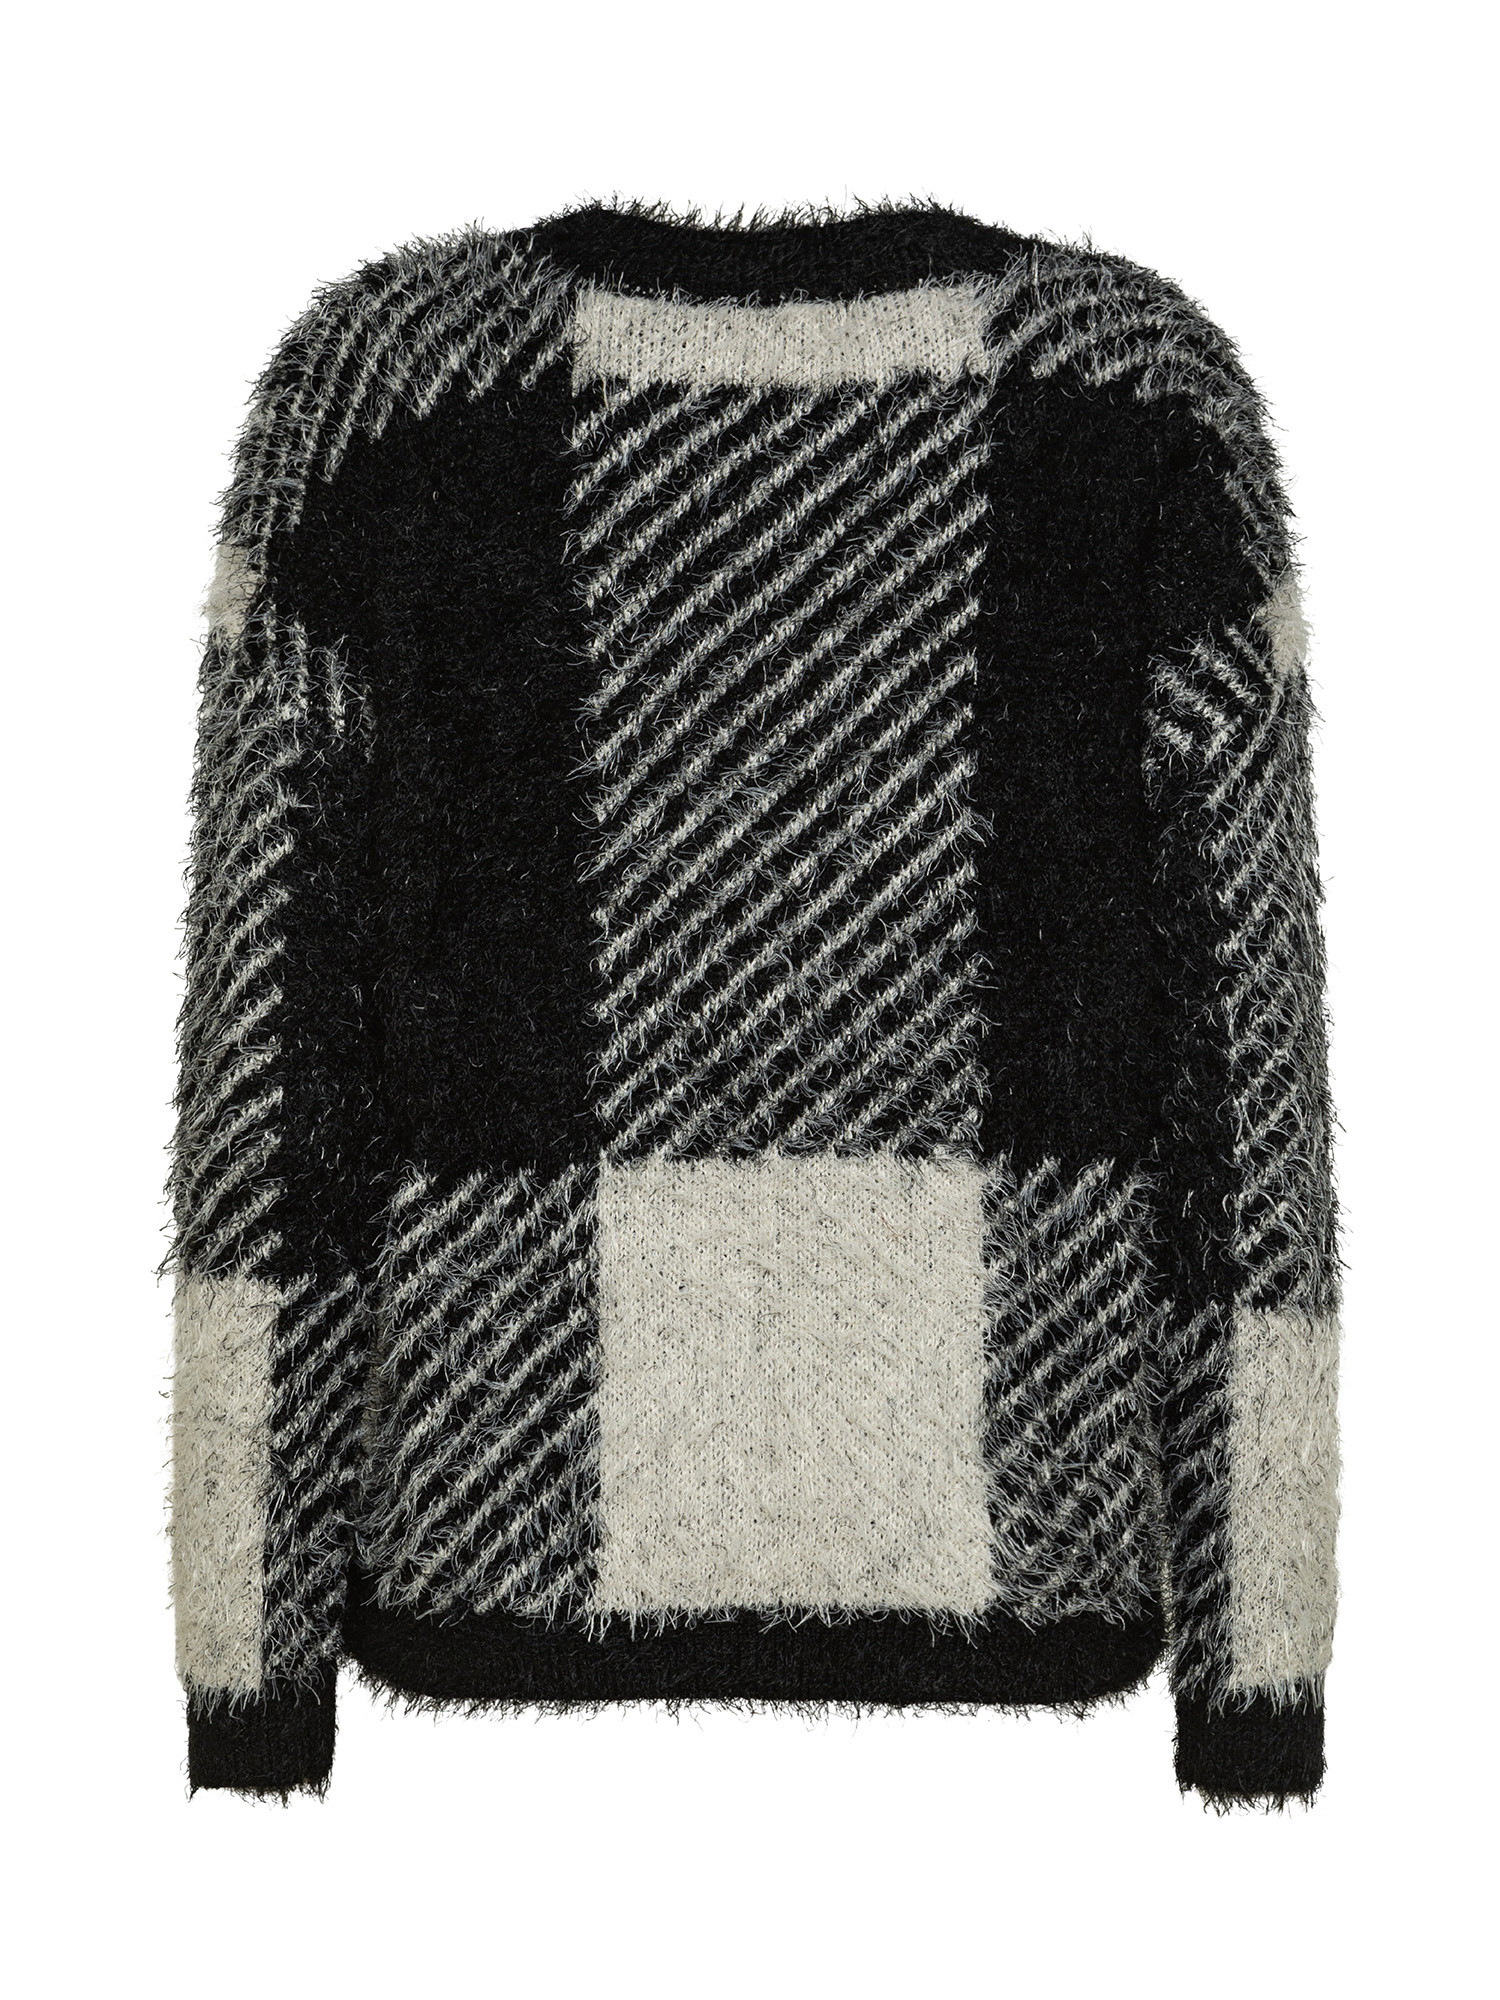 Koan - Checked crewneck pullover, Black, large image number 1